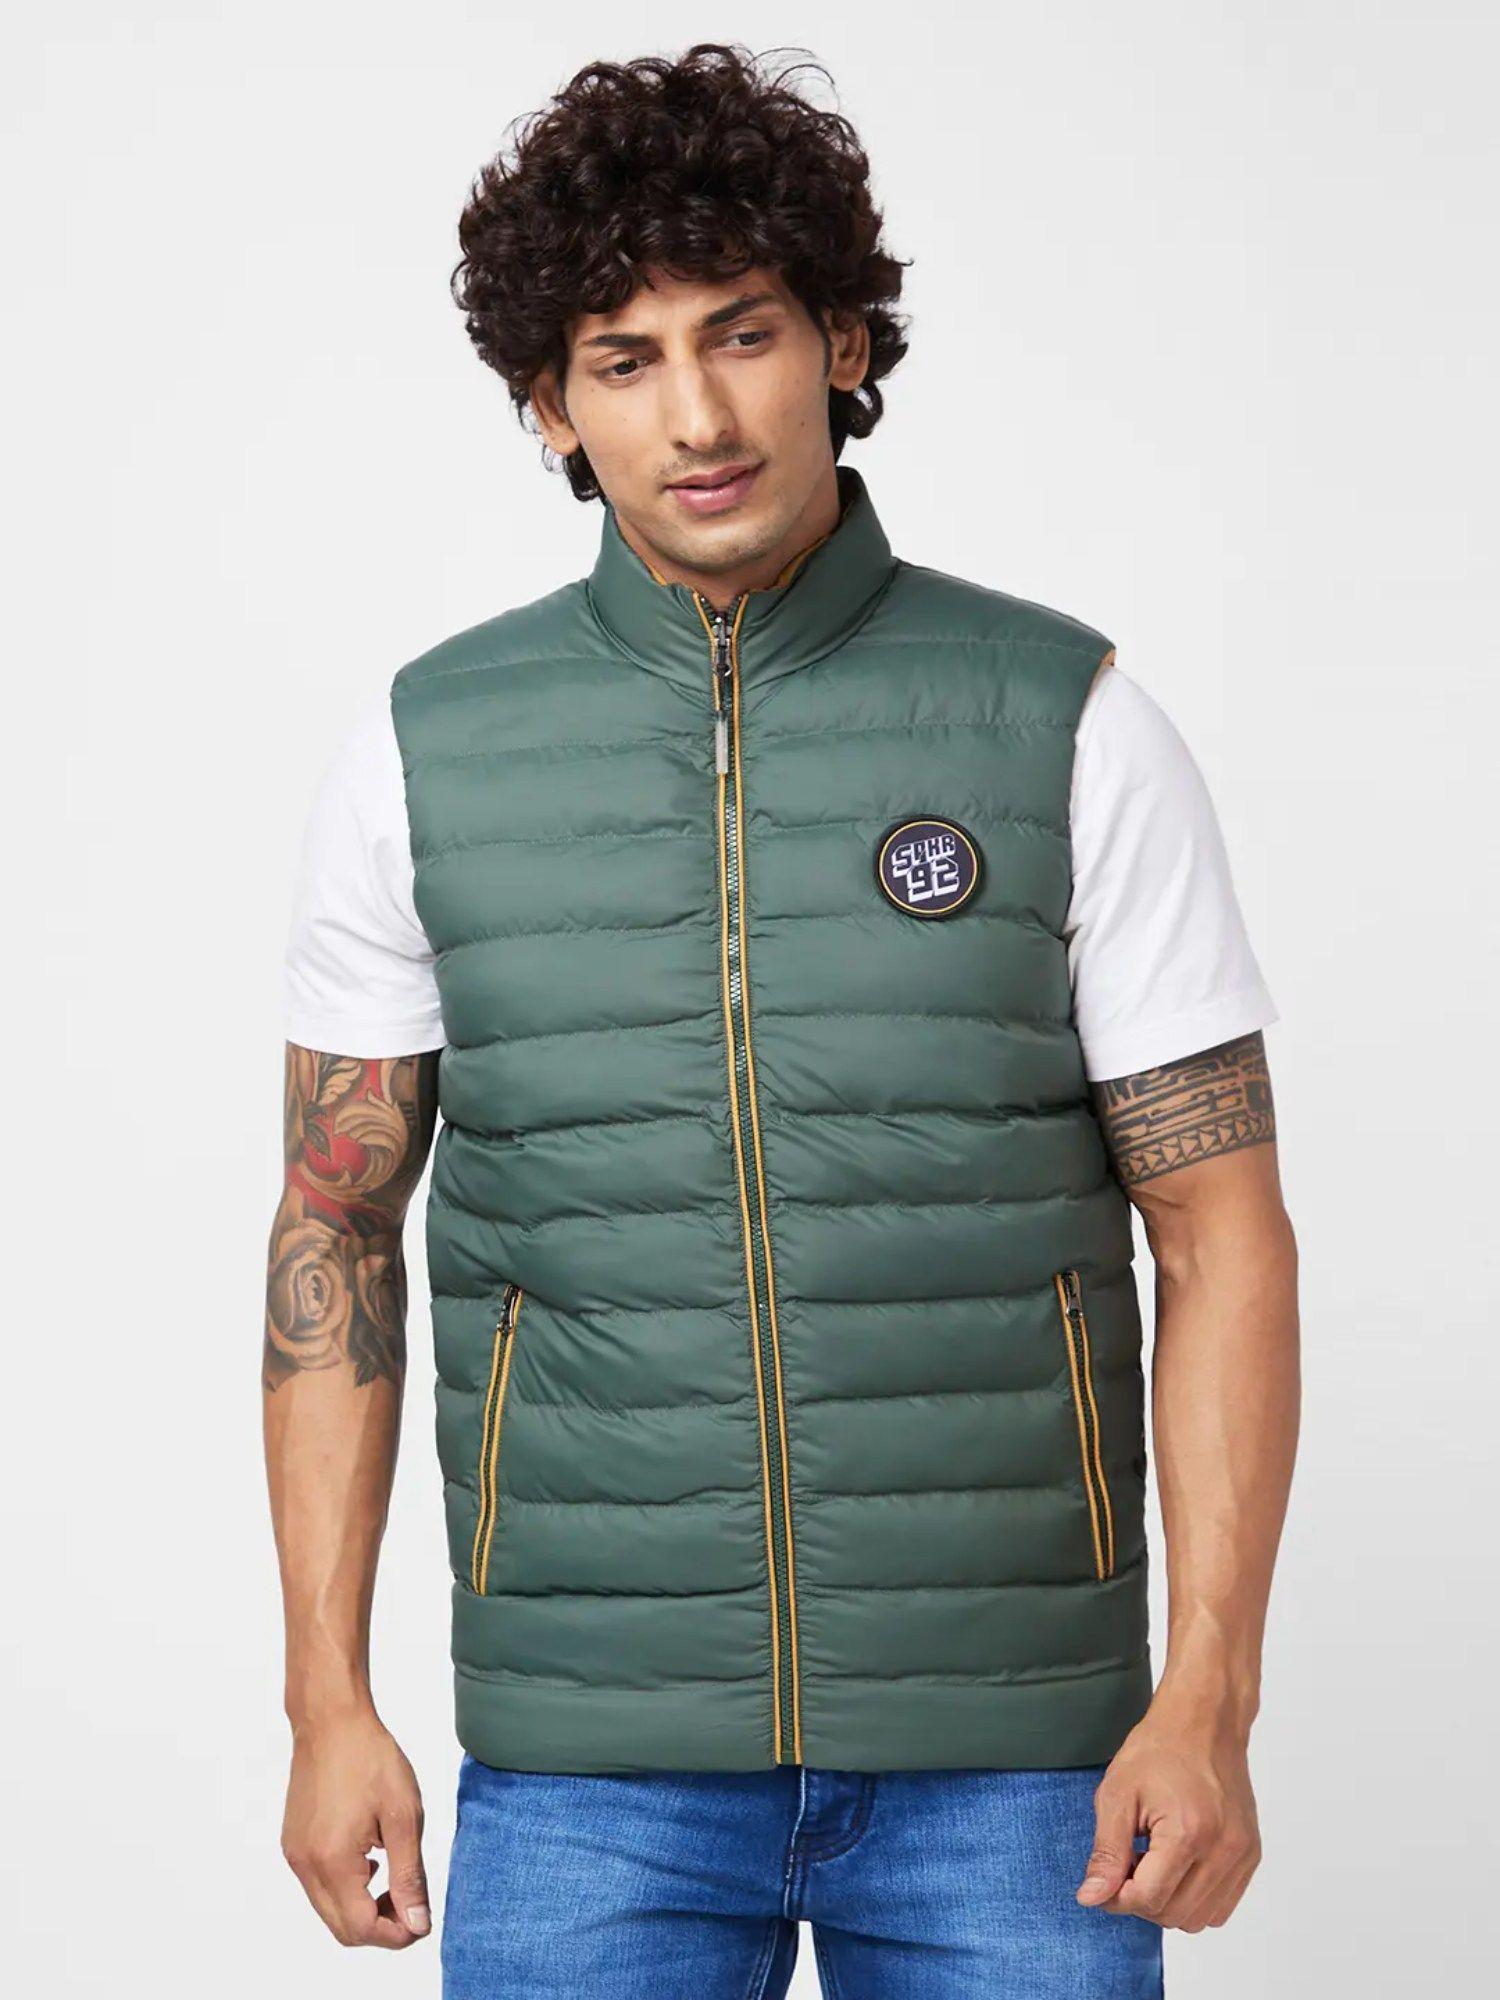 men's sleeveless reversible jacket with diy velcro badges